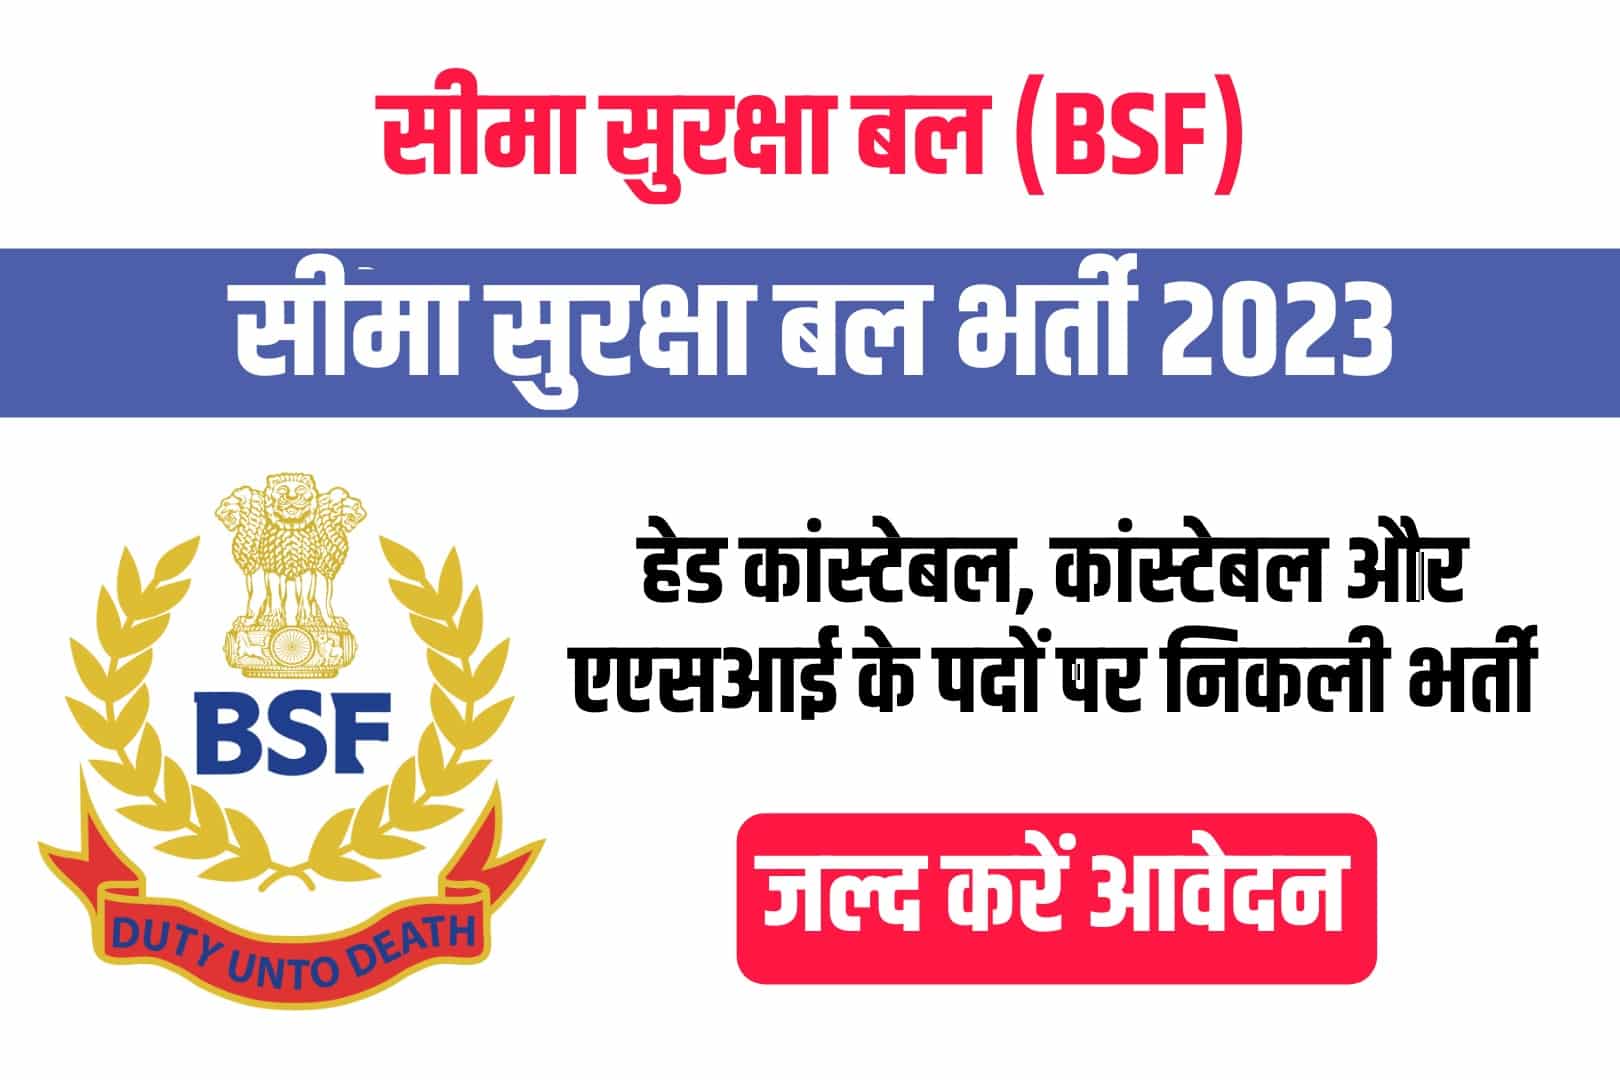 BSF HC ASI Constable Group C Recruitment 2023